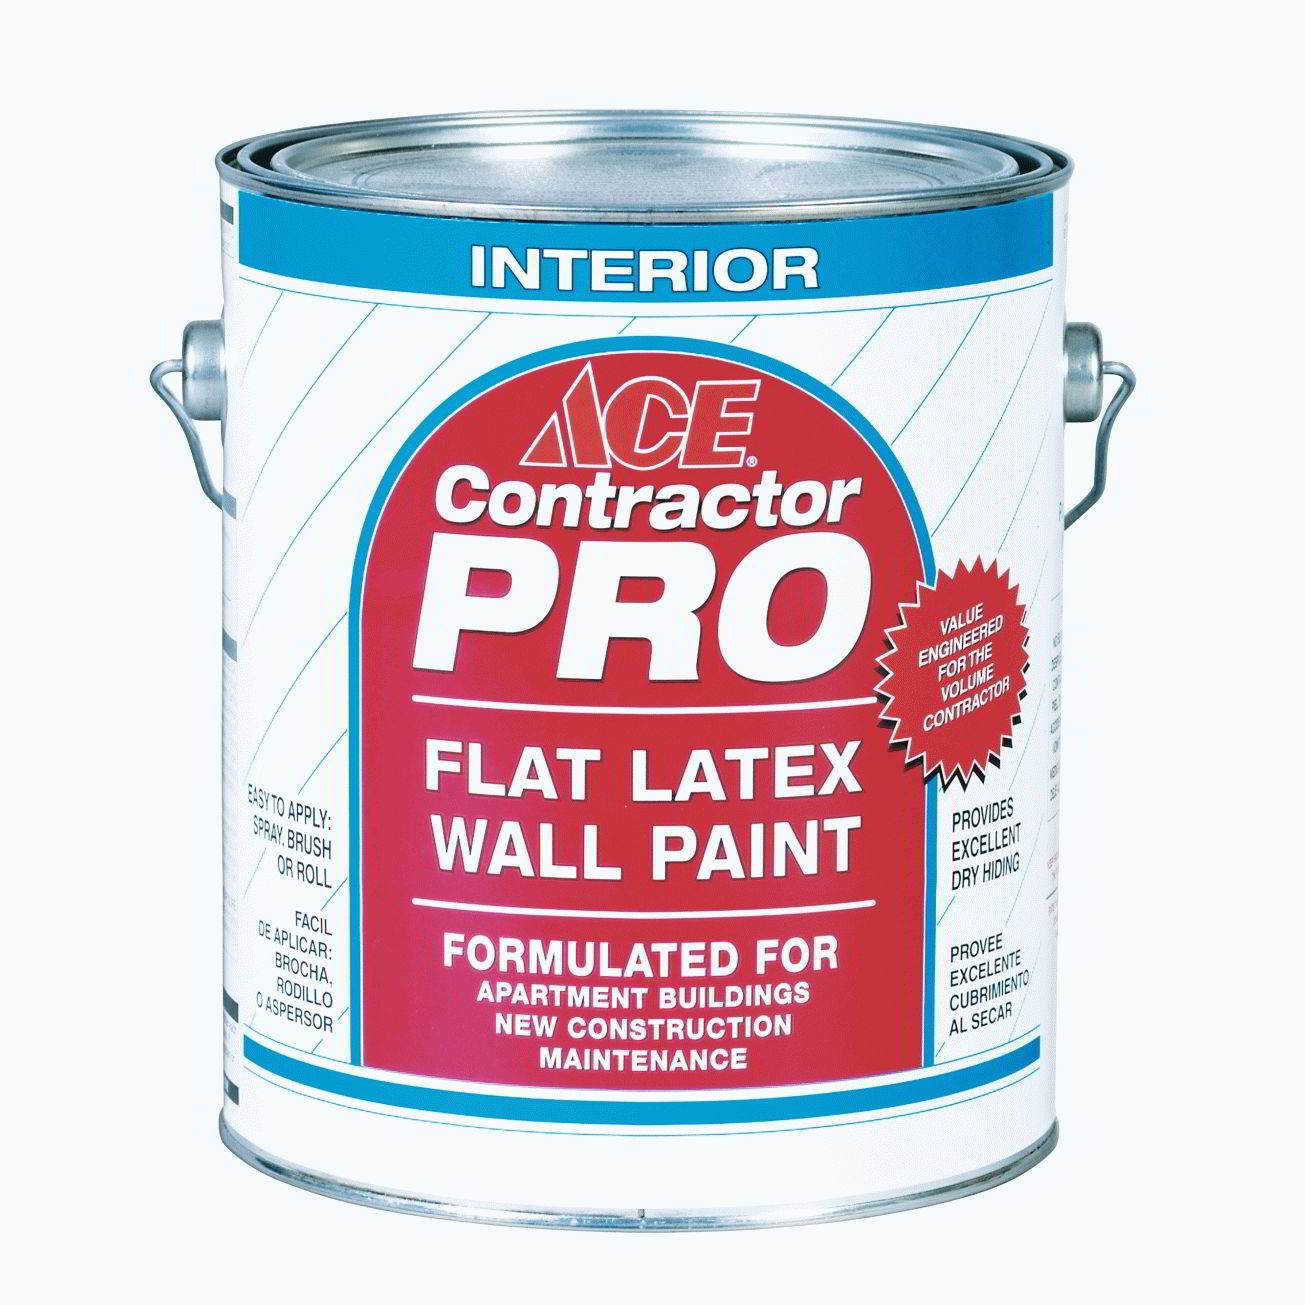 Kraska Ace Kontractor Pro Interior Wall Paint